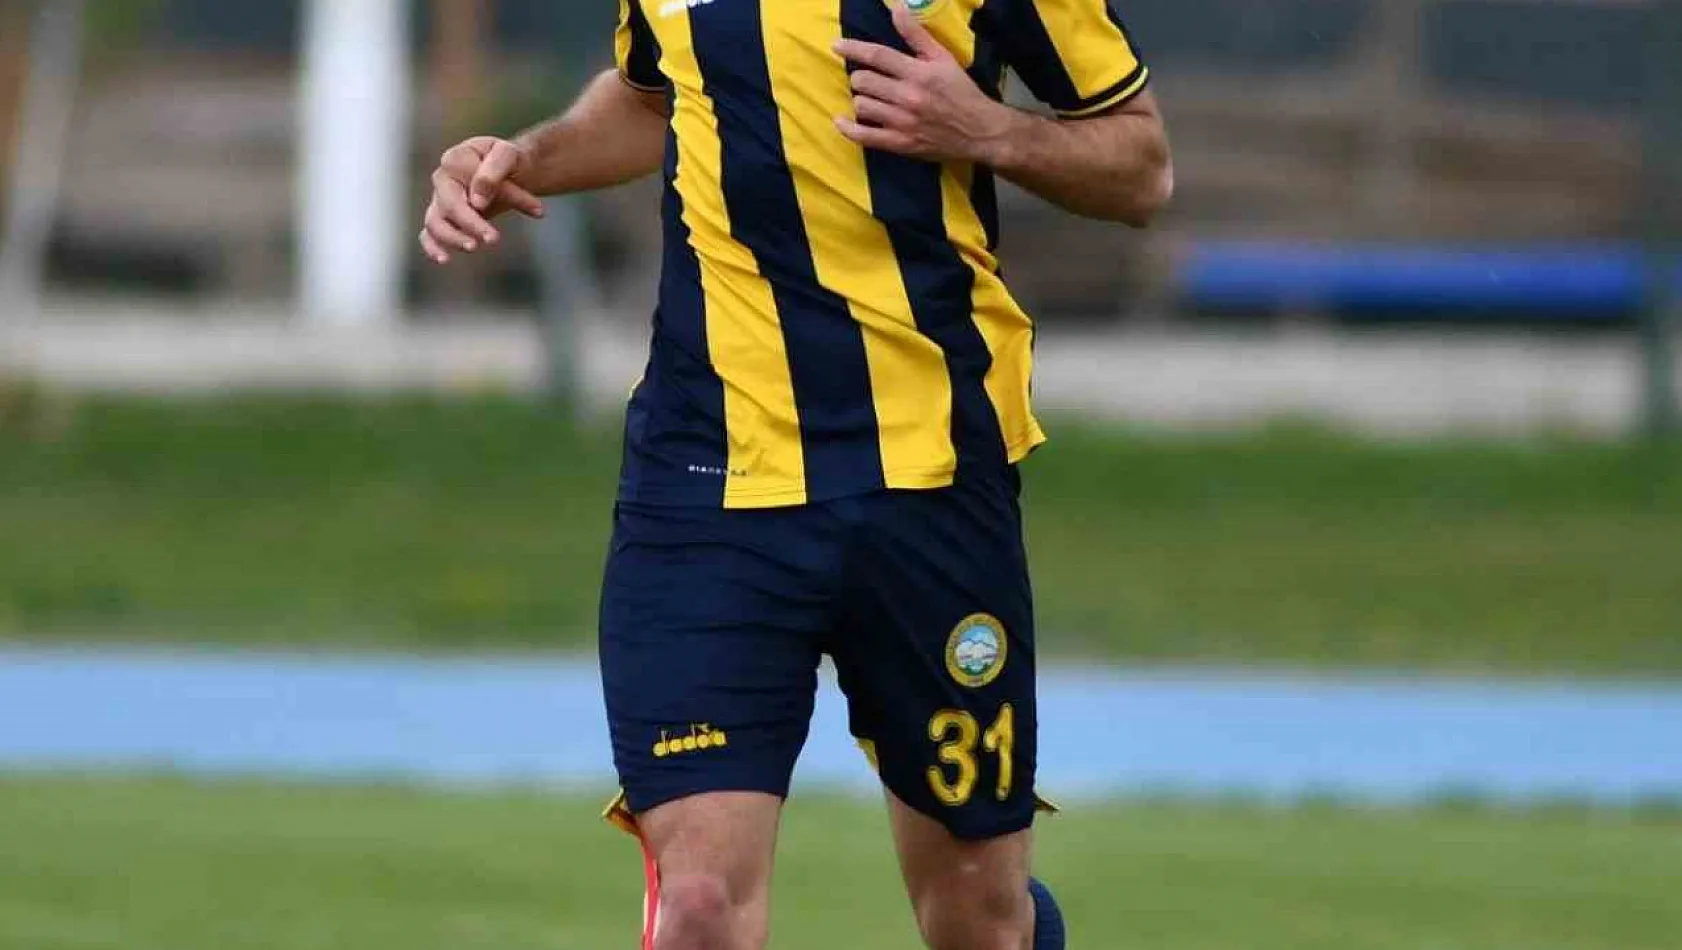 Talasgücü'nün golcüsü 9. golünü kaydetti